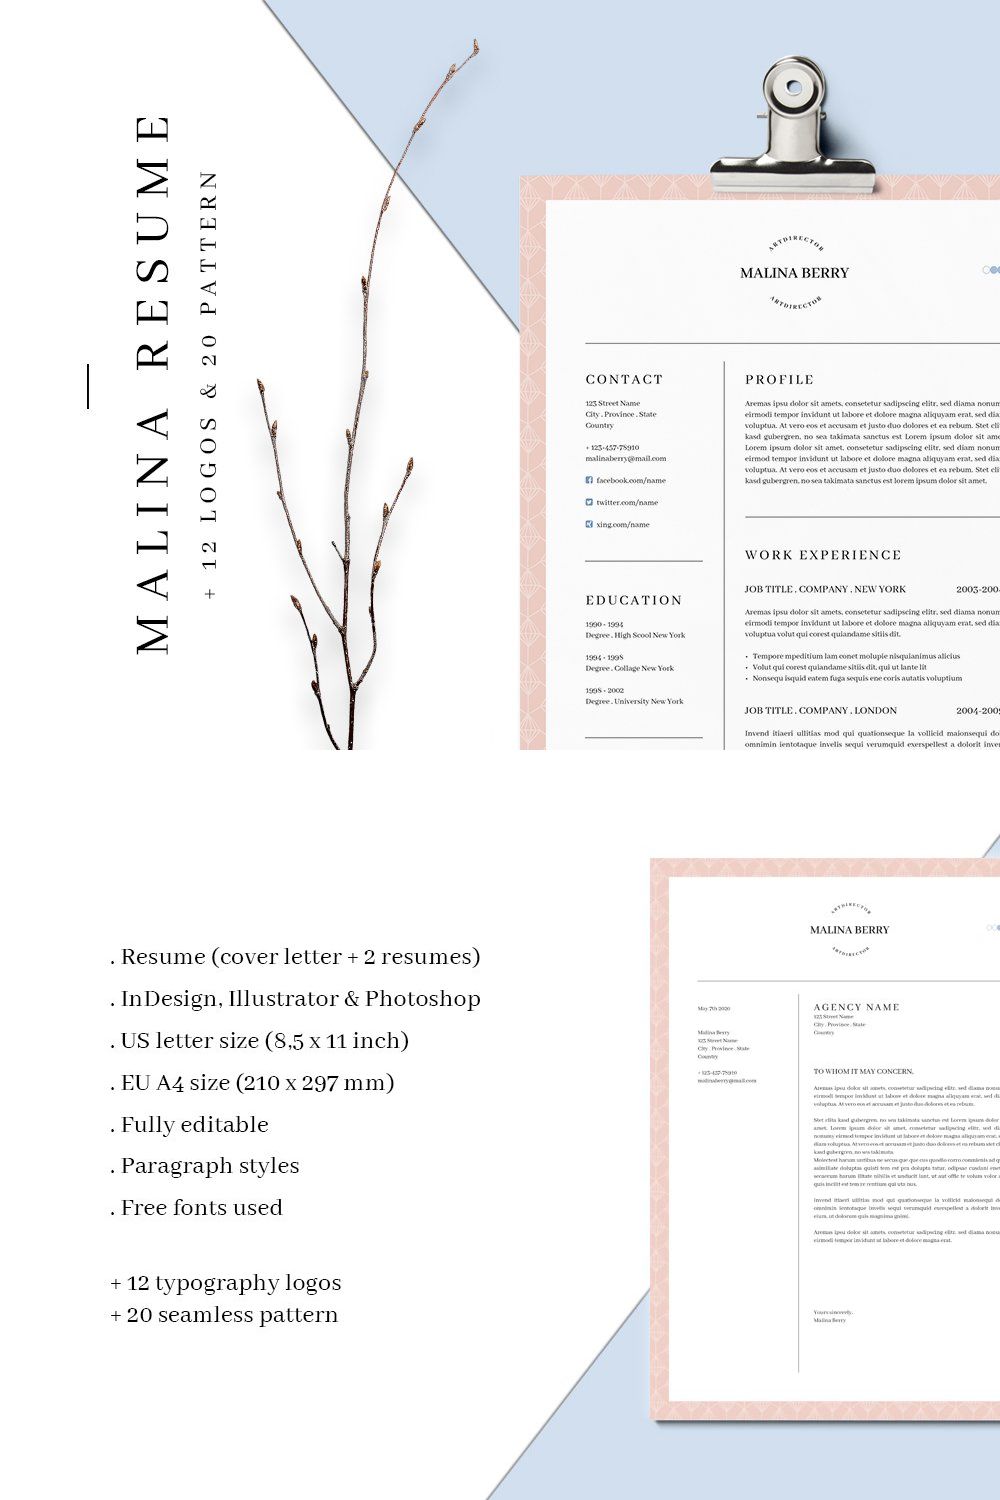 MALINA Resume – 3 Pages + Bonus pinterest preview image.